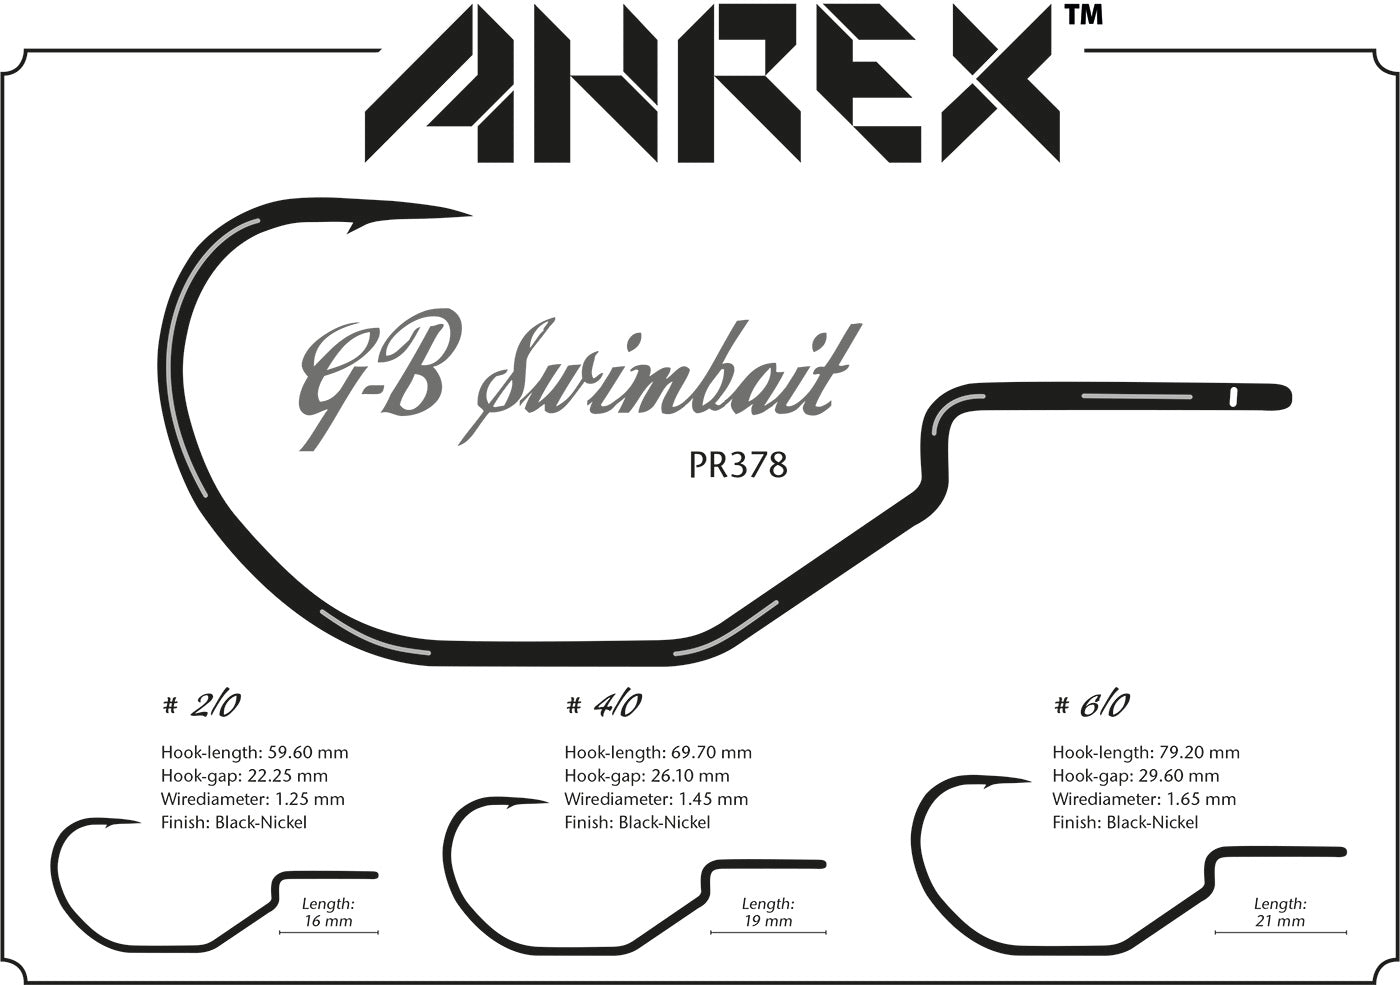 Ahrex PR378 GB Predator Swimbait